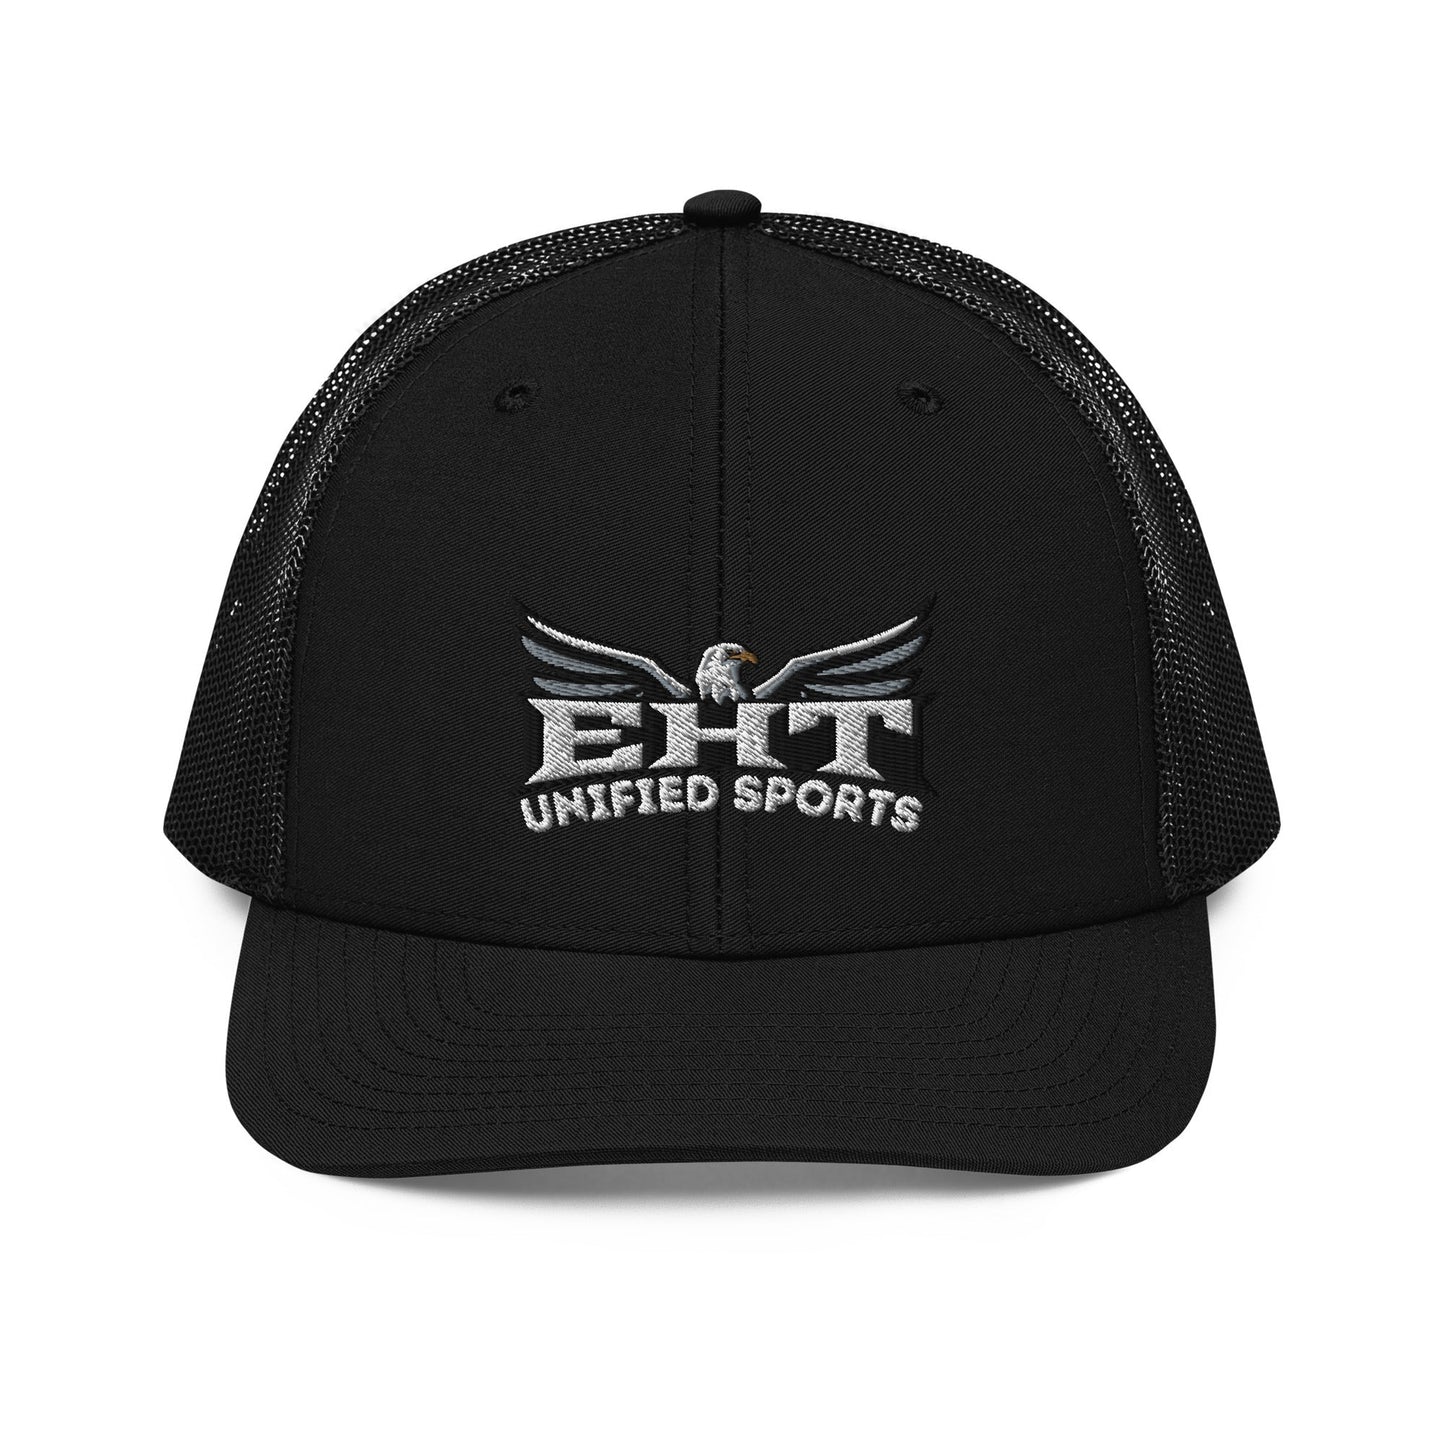 EHT Unified Sports Trucker Cap